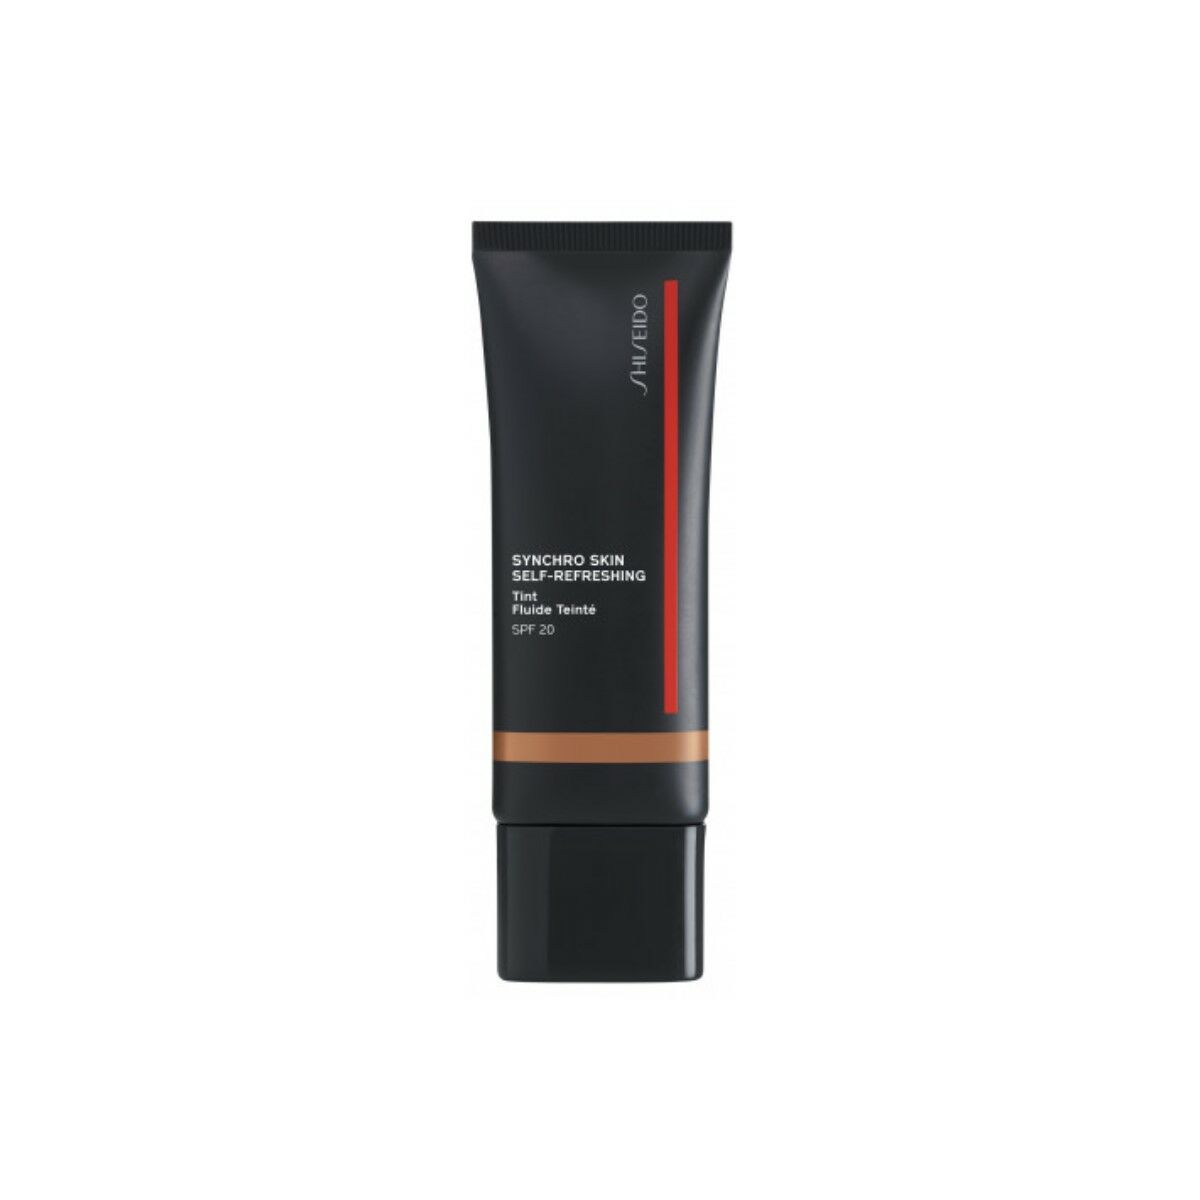 Flüssig-Make-up-Grundierung Shiseido Synchro Skin Self-Refreshing 415-tan kwanzan (30 ml) - CA International 